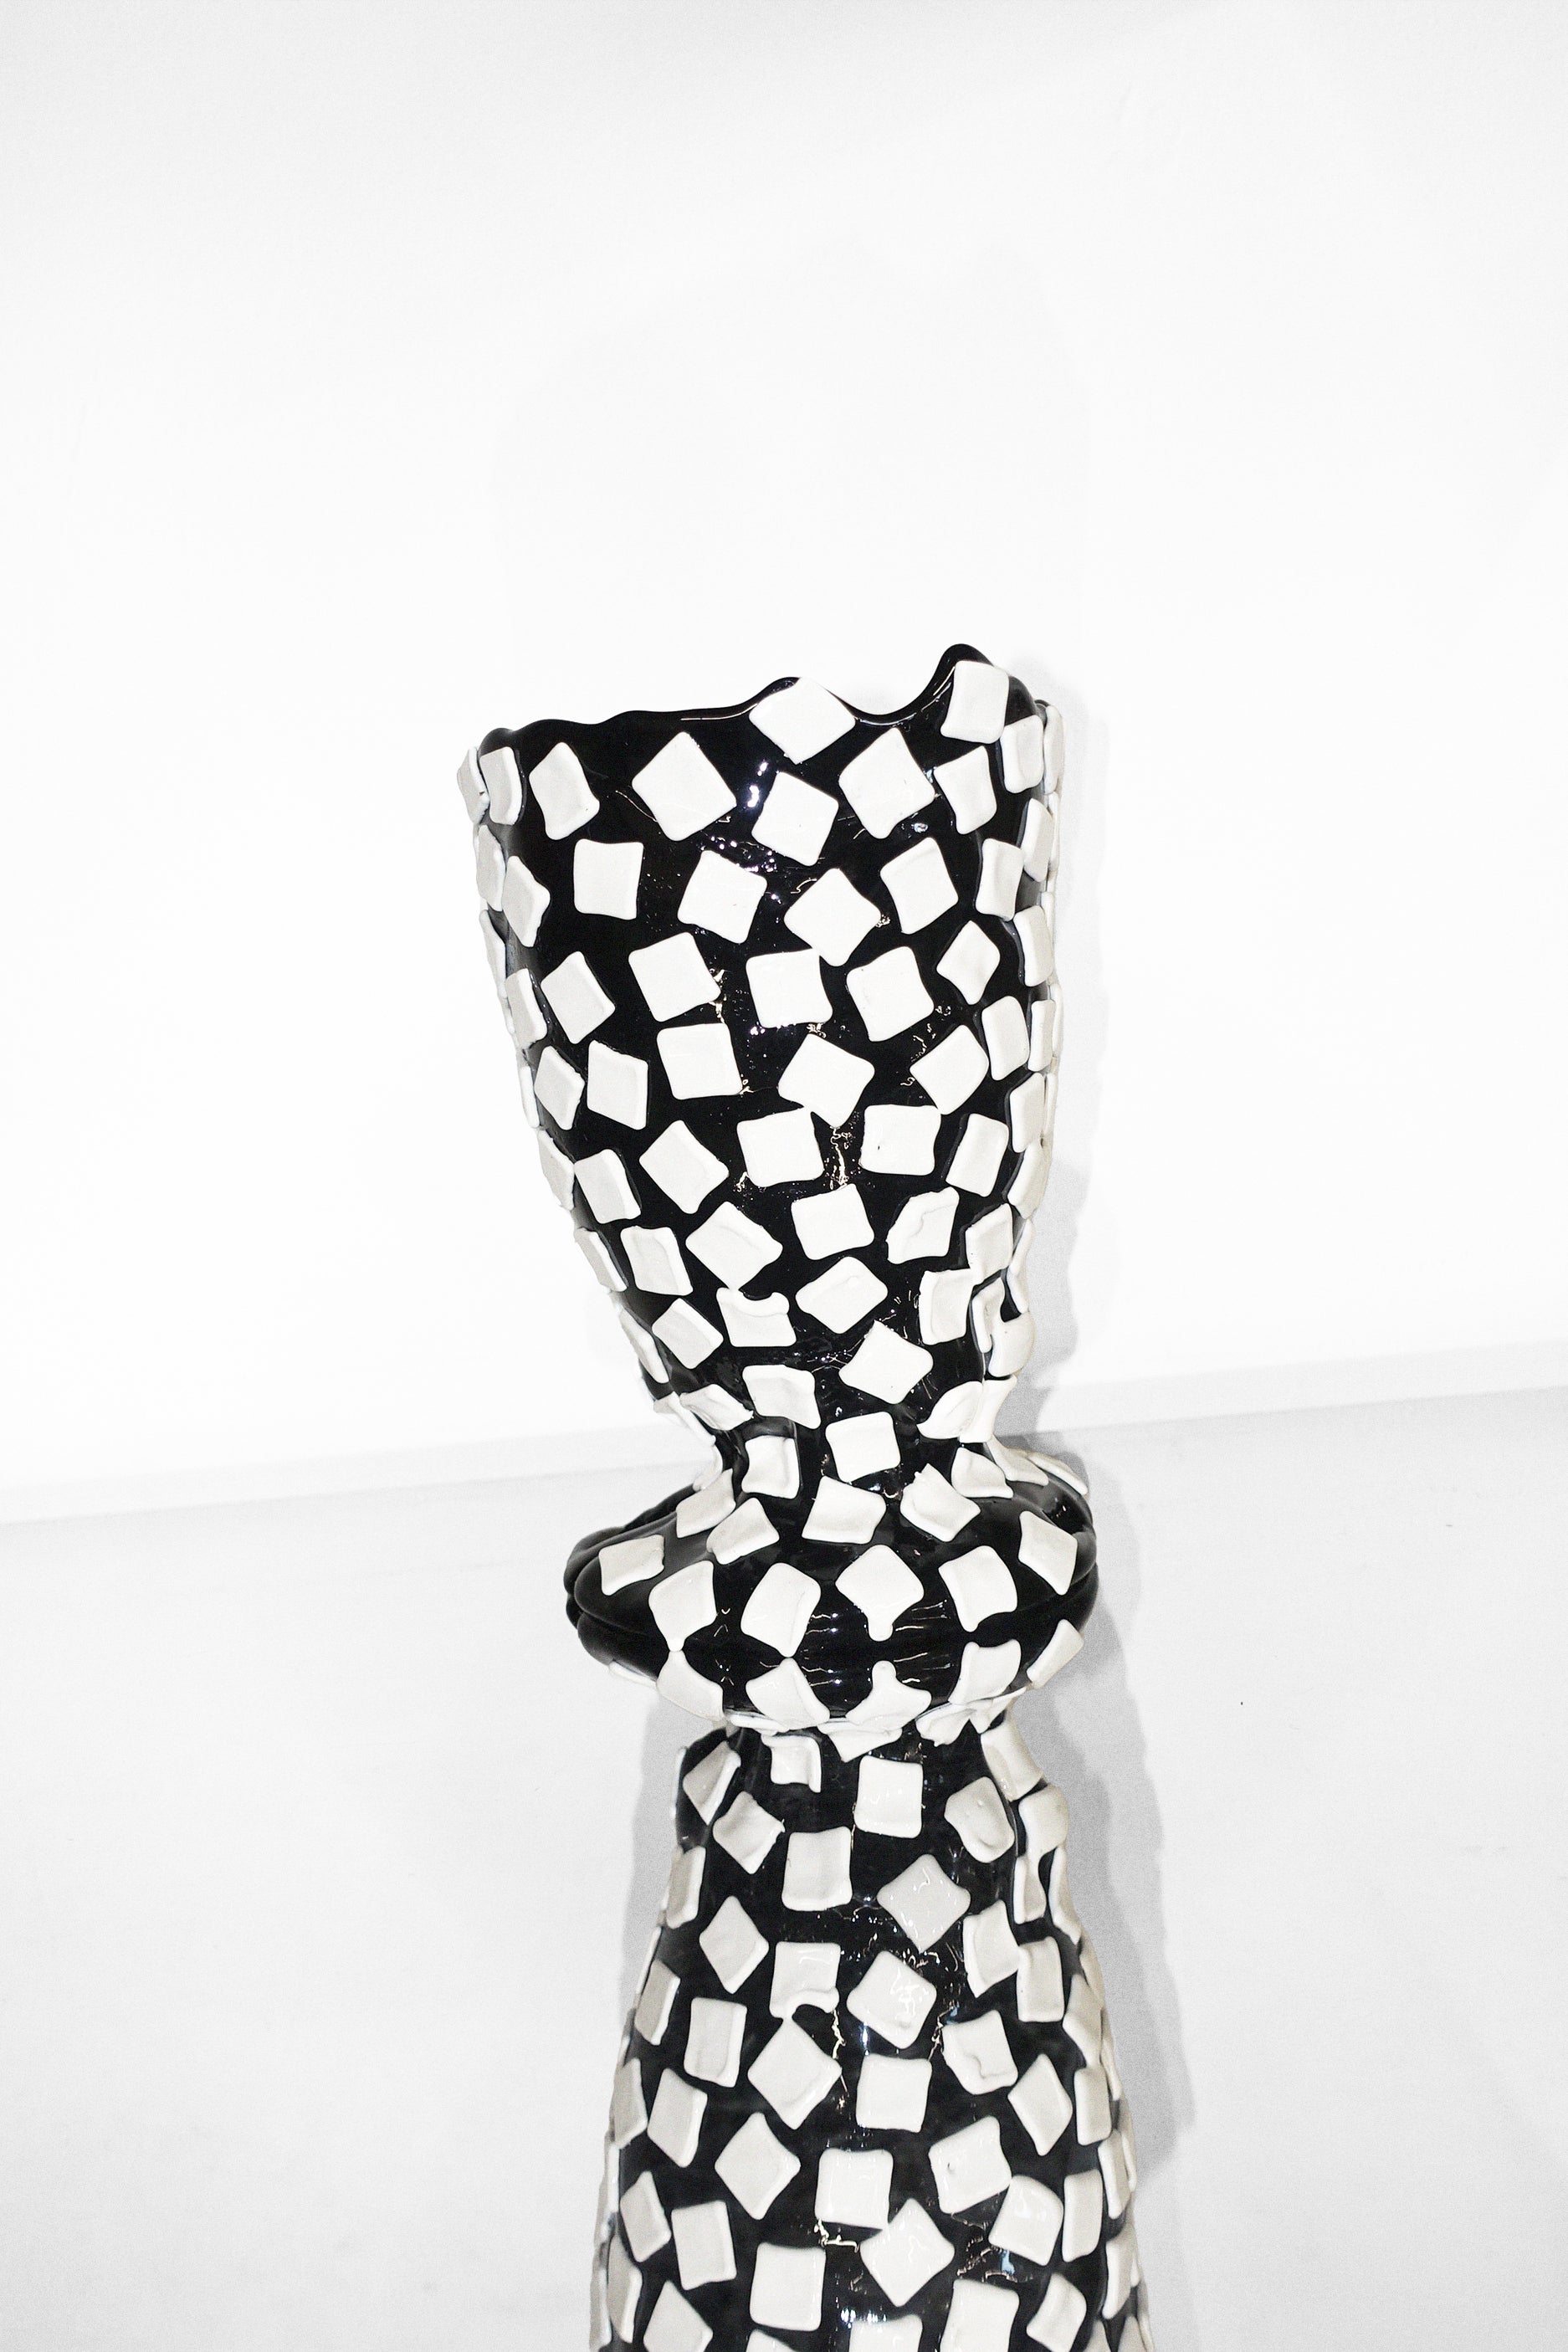 Rock Vase in Matte Black & White - Small